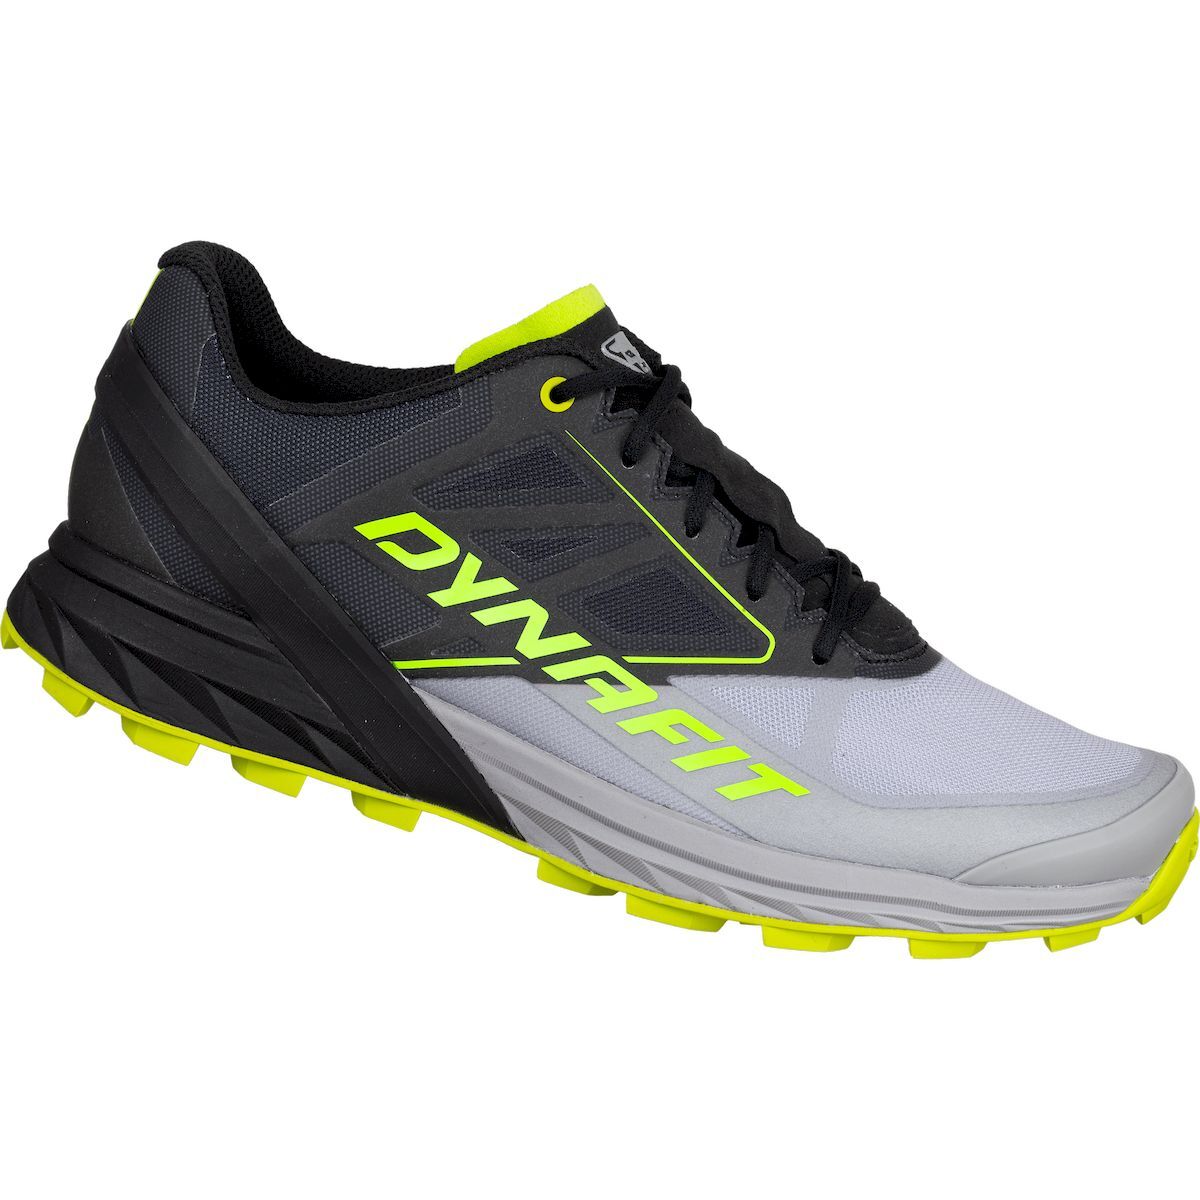 Dynafit Alpine - Trail running shoes - Men's